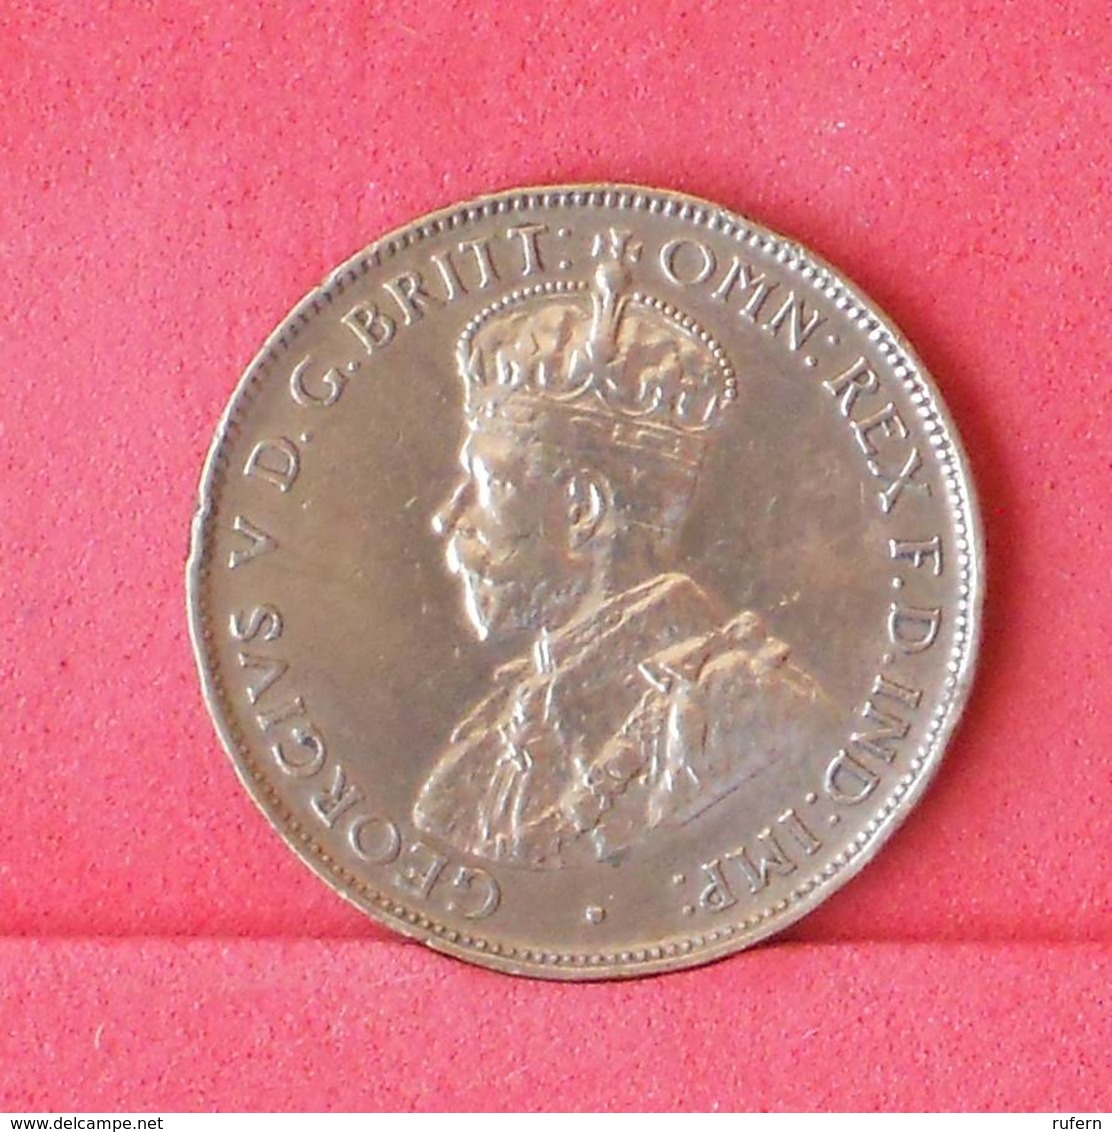 AUSTRALIA 1/2 PENNY 1935 -    KM# 22 - (Nº29994) - ½ Penny